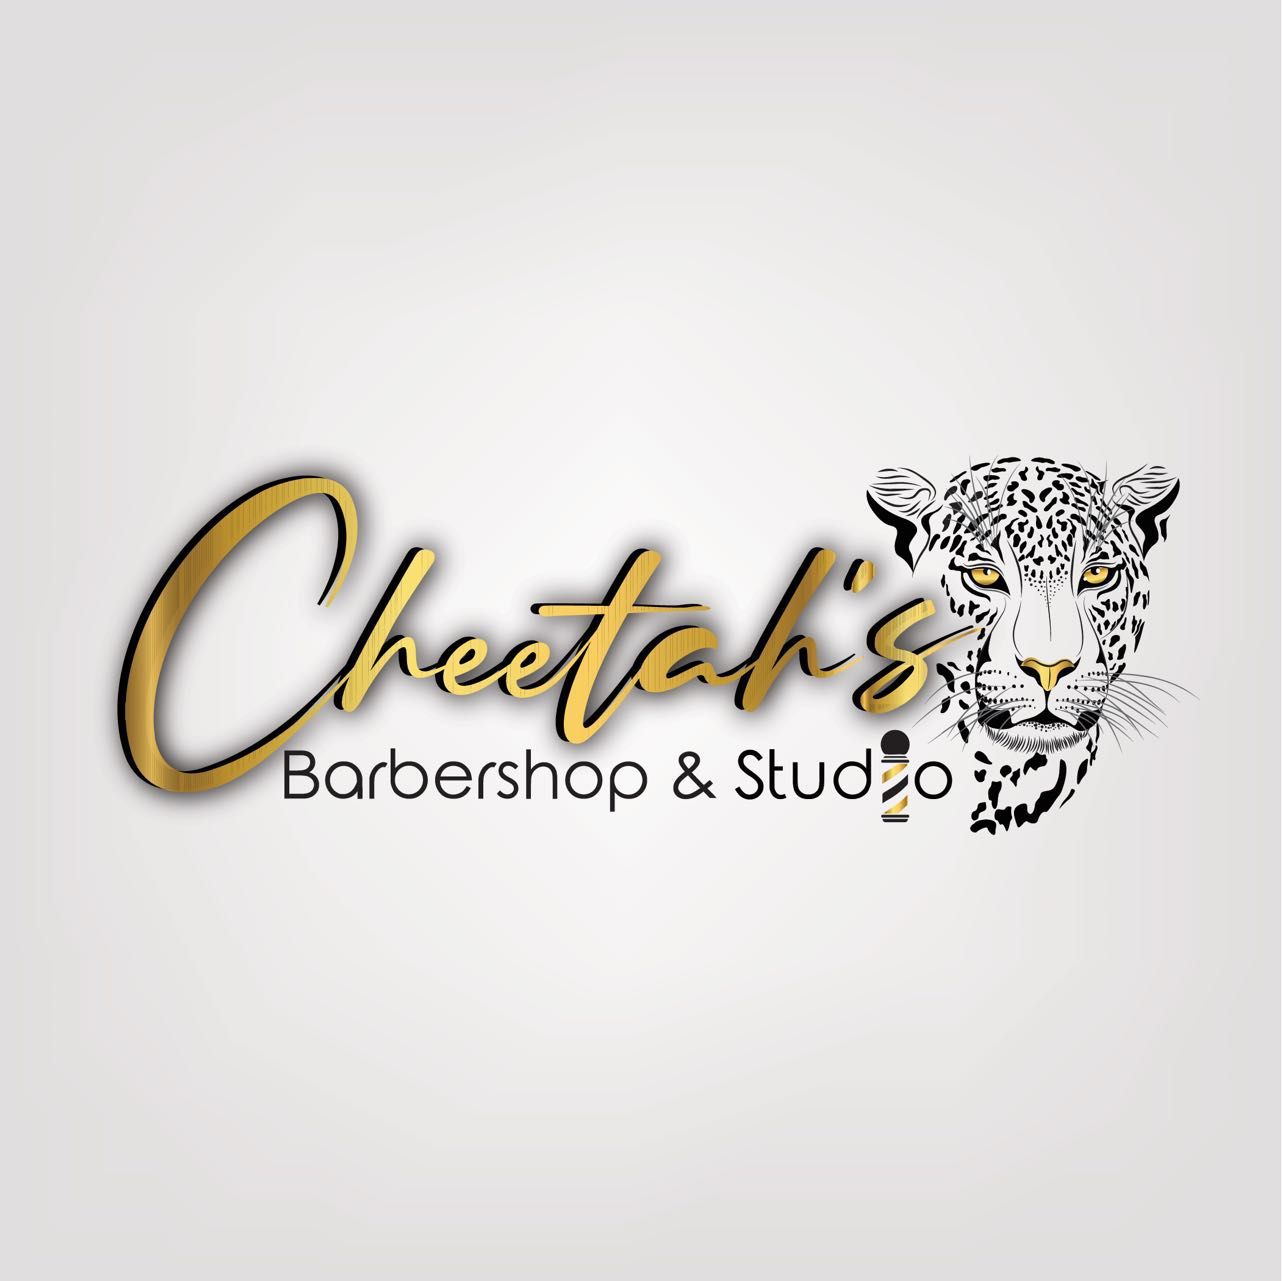 Cheetah’s Barbershop & Studio, 216 East Expressway 83, Suit S, Suit S, Pharr, 78577